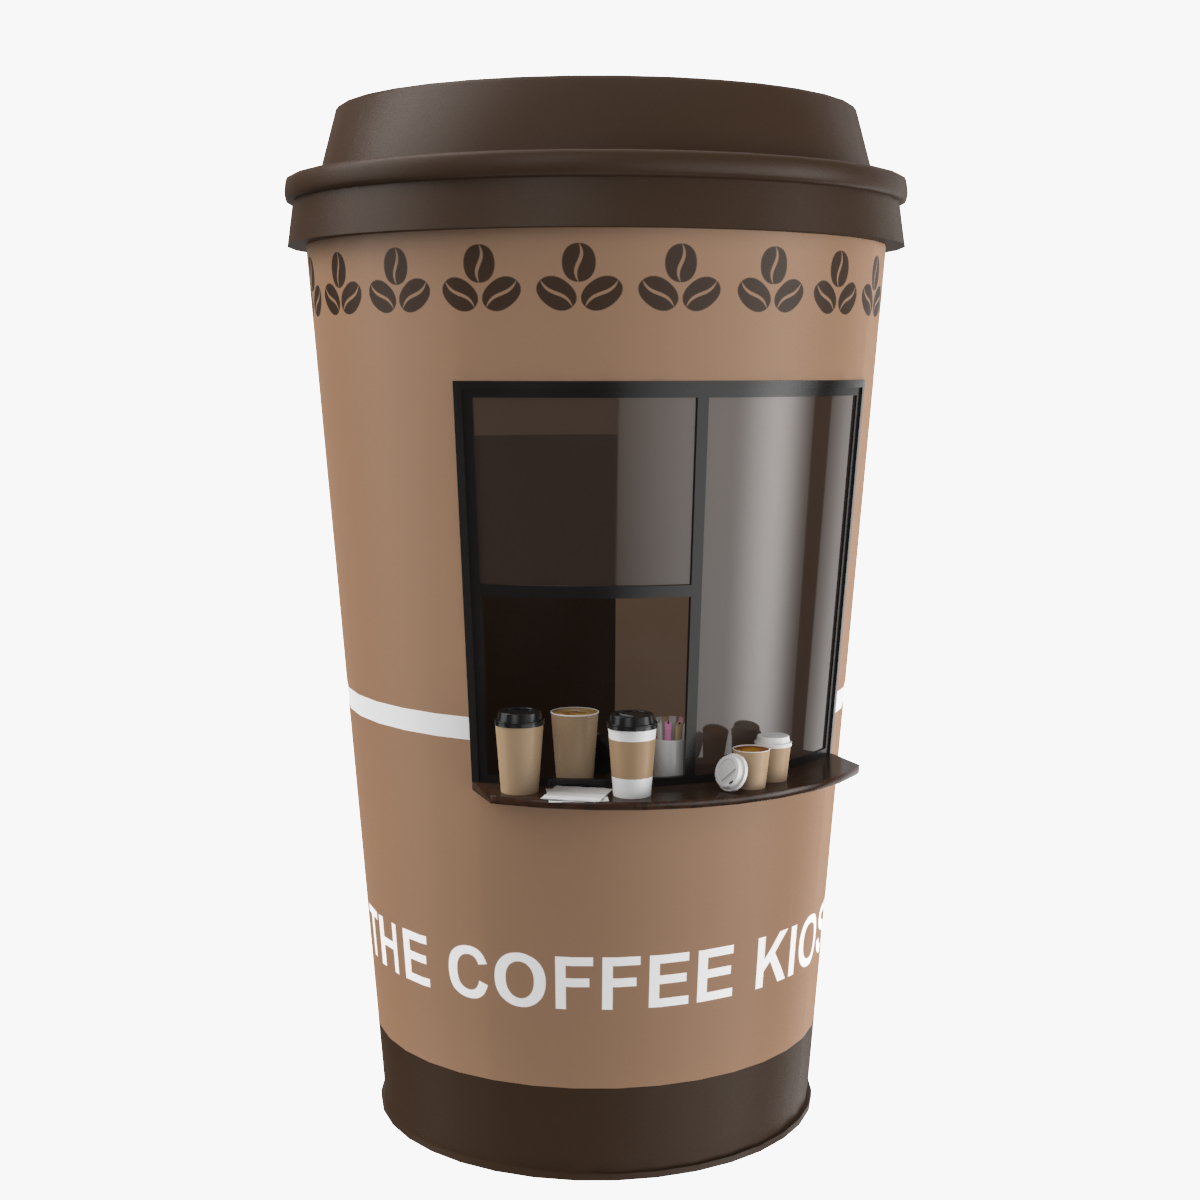 Coffee kiosk sugar napkins 3D model - TurboSquid 1439420